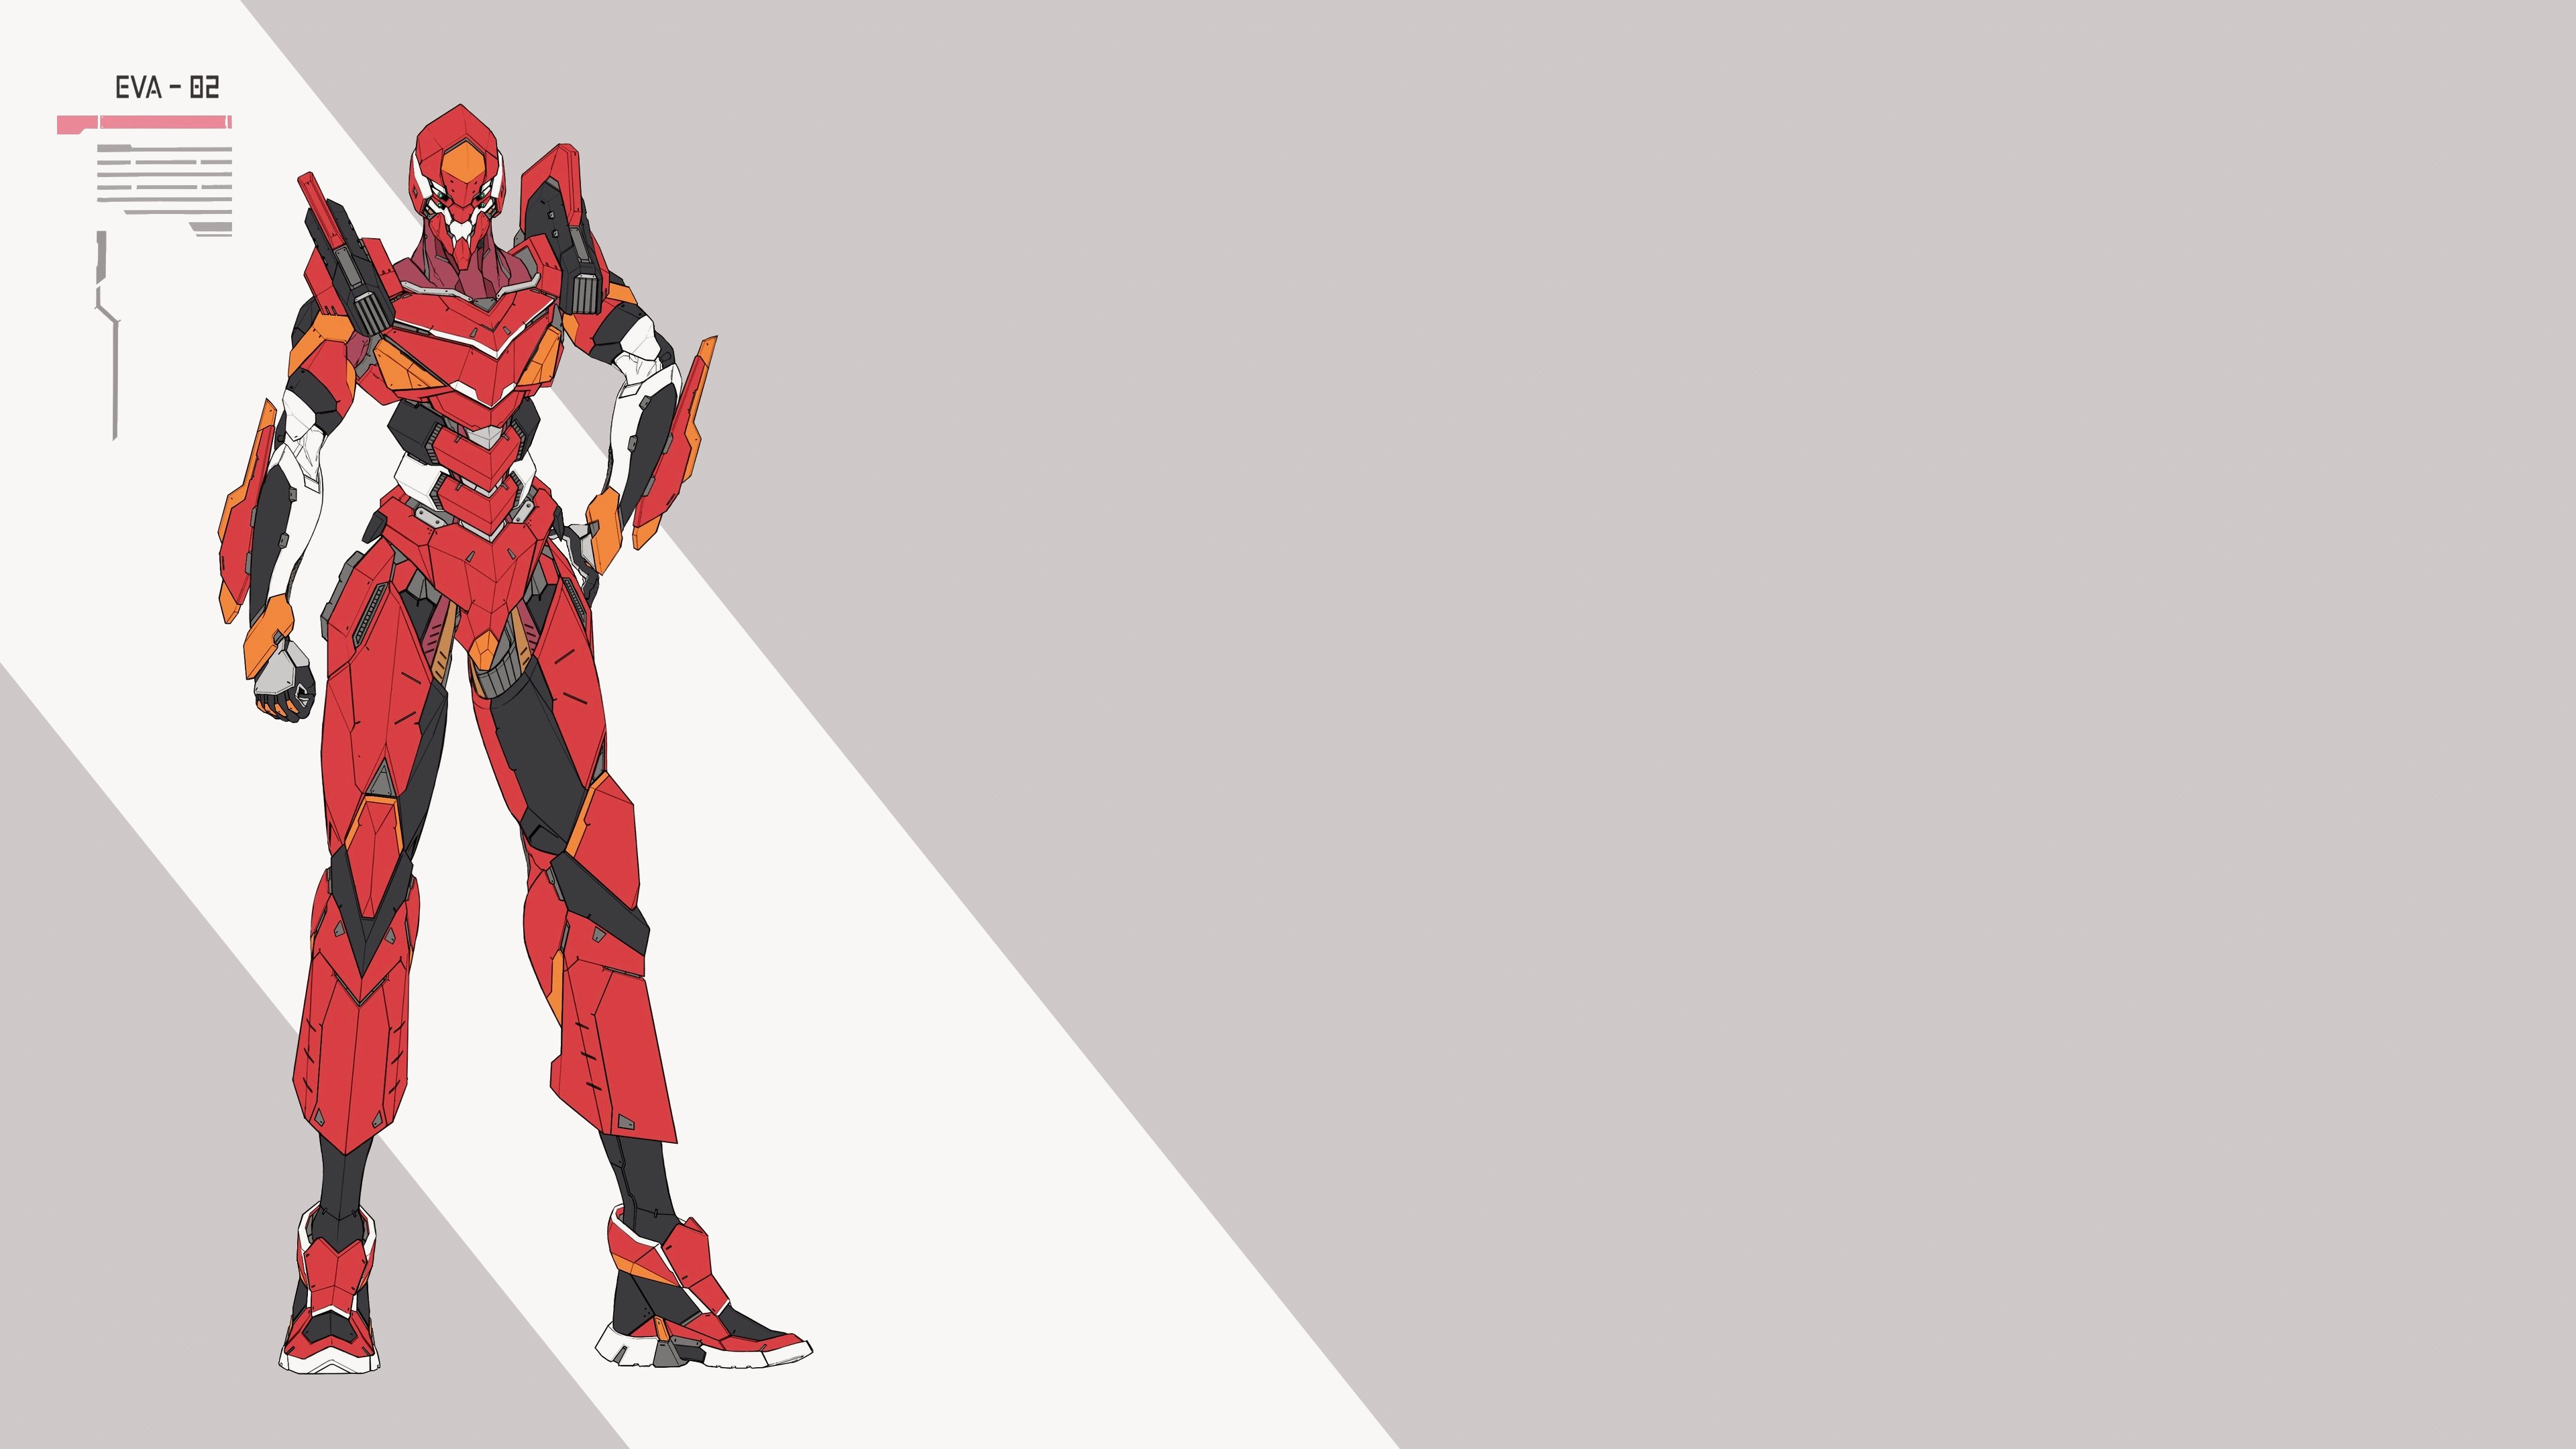 Anime 3840x2160 Neon Genesis Evangelion fan art EVA Unit 02 robot hands on hips simple background anime text redesigned gray background armor ctpt9r standing mechs